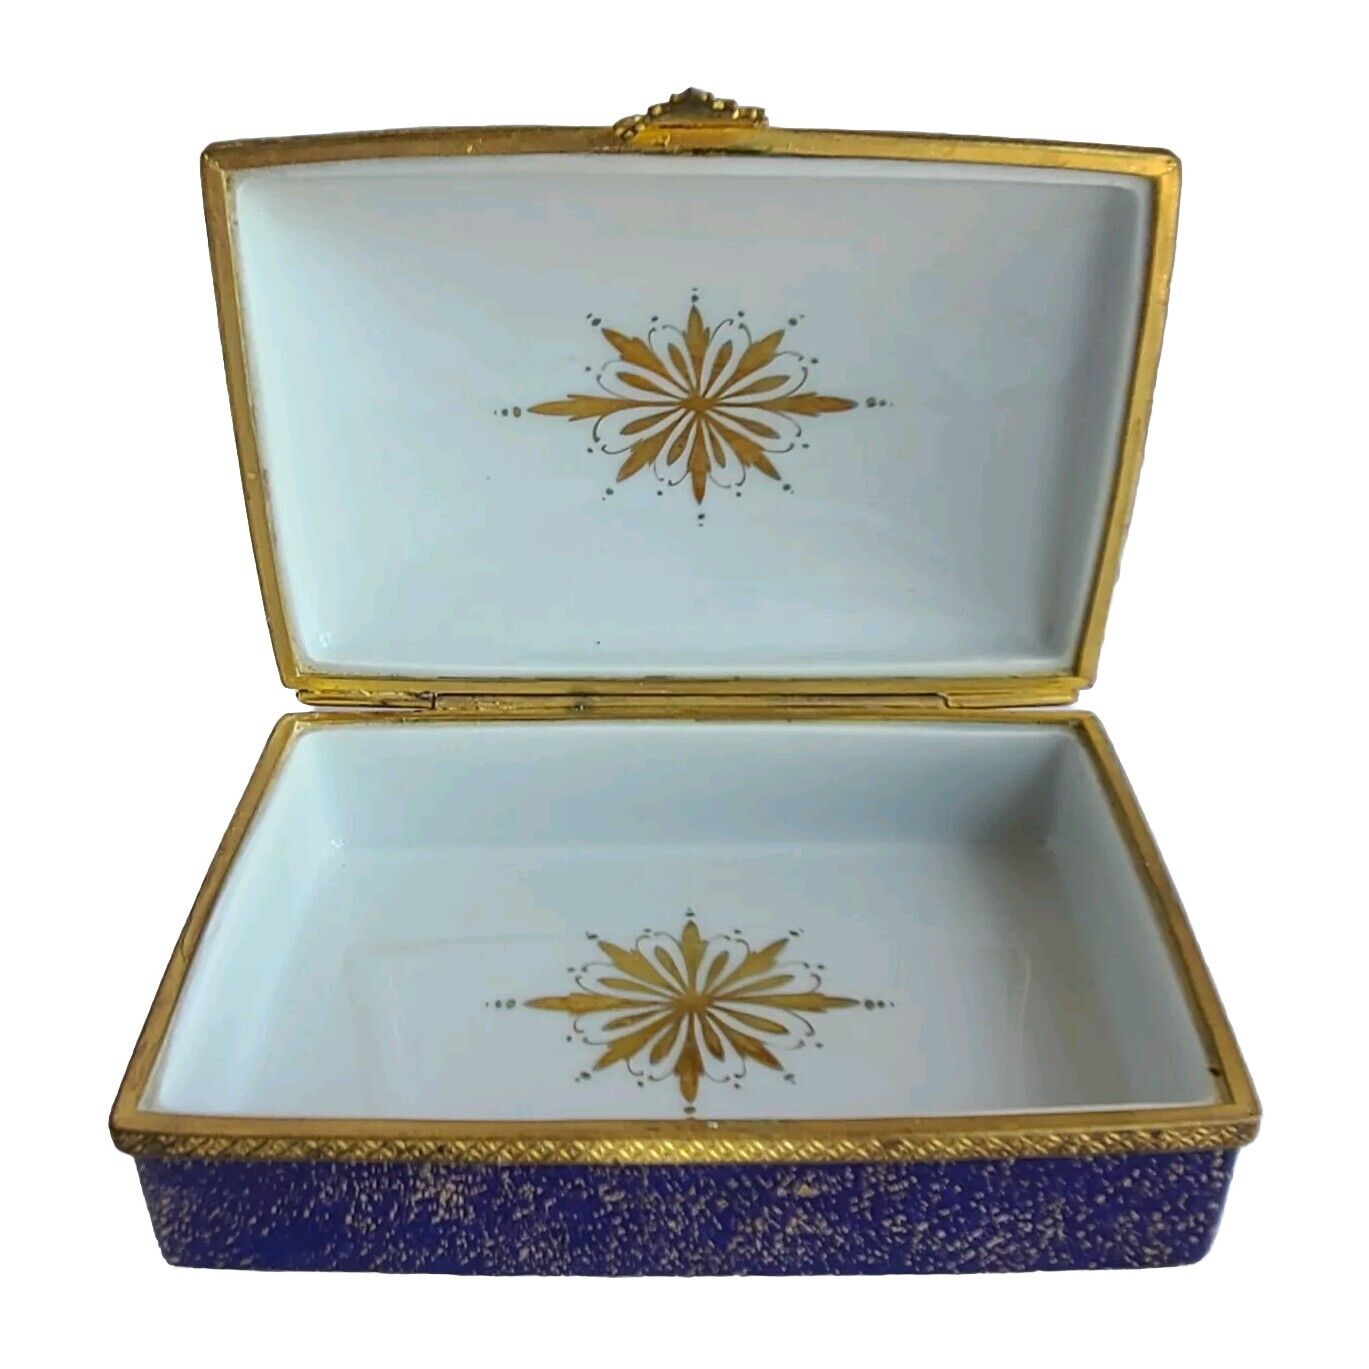 ANTIQUE LIMOGES FRANCE BLUE GOLD HAND PAINTED PORCELAIN TRINKET JEWELRY BOX